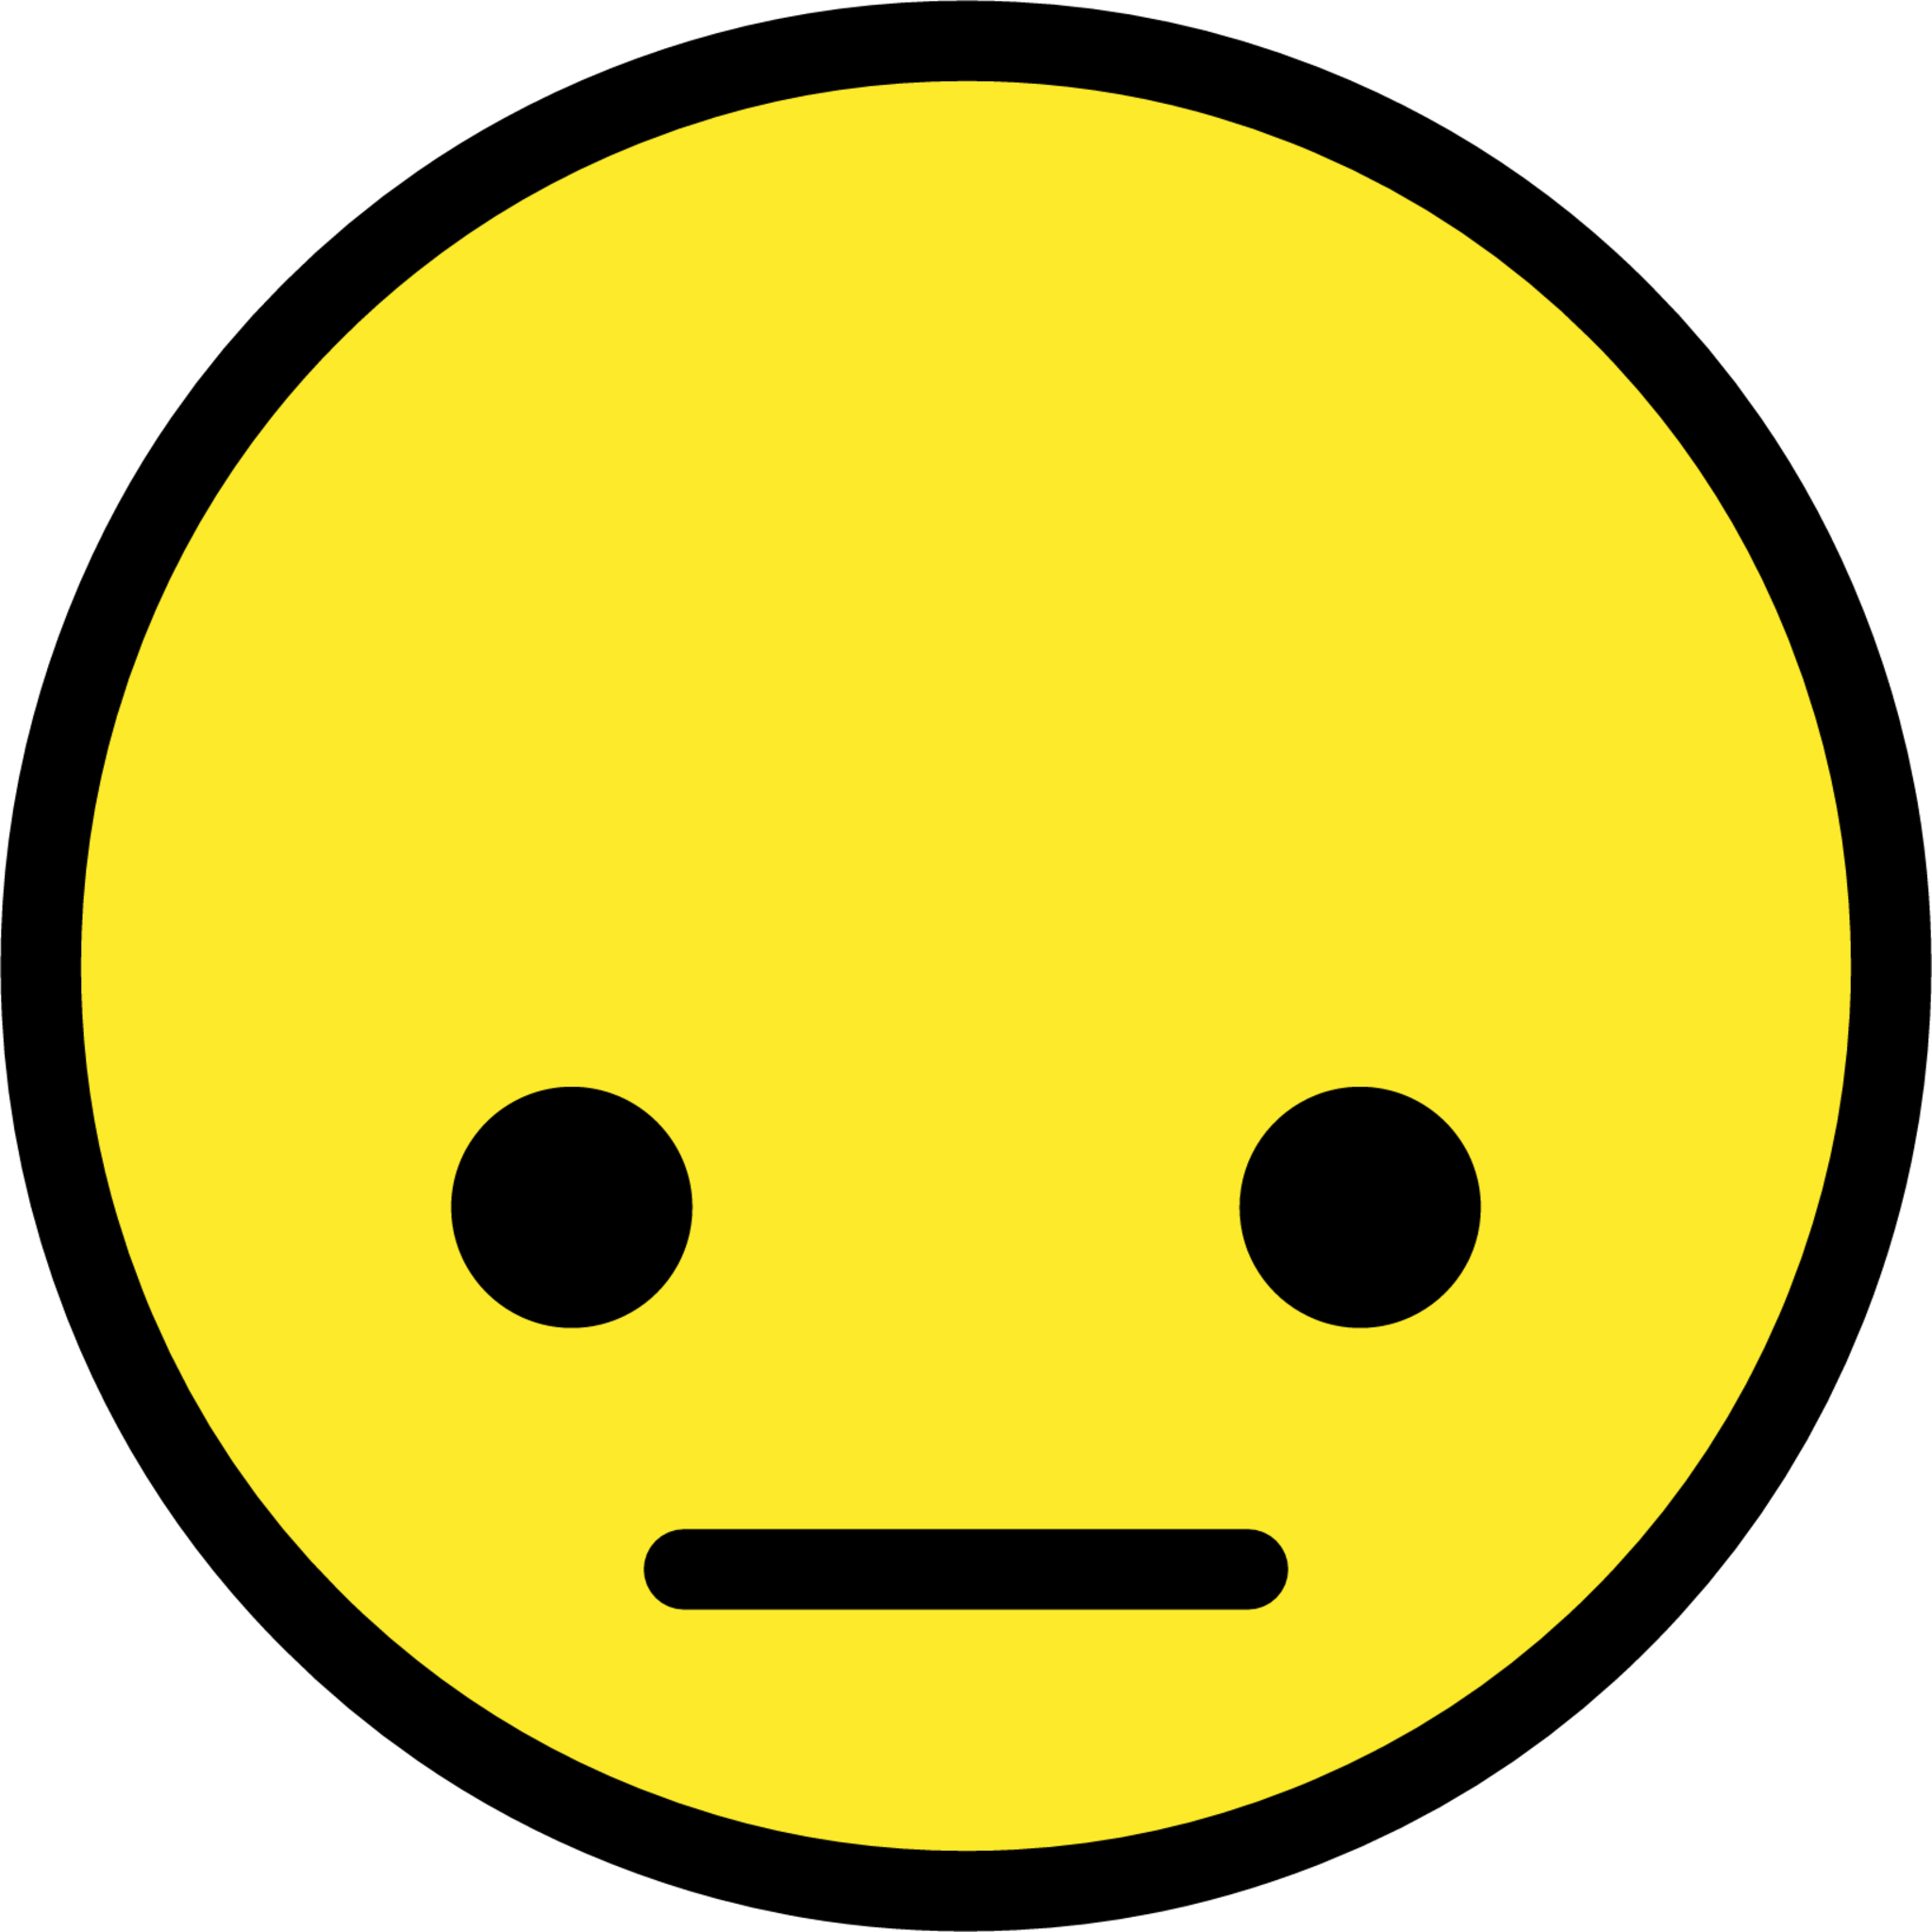 dejected face emoji